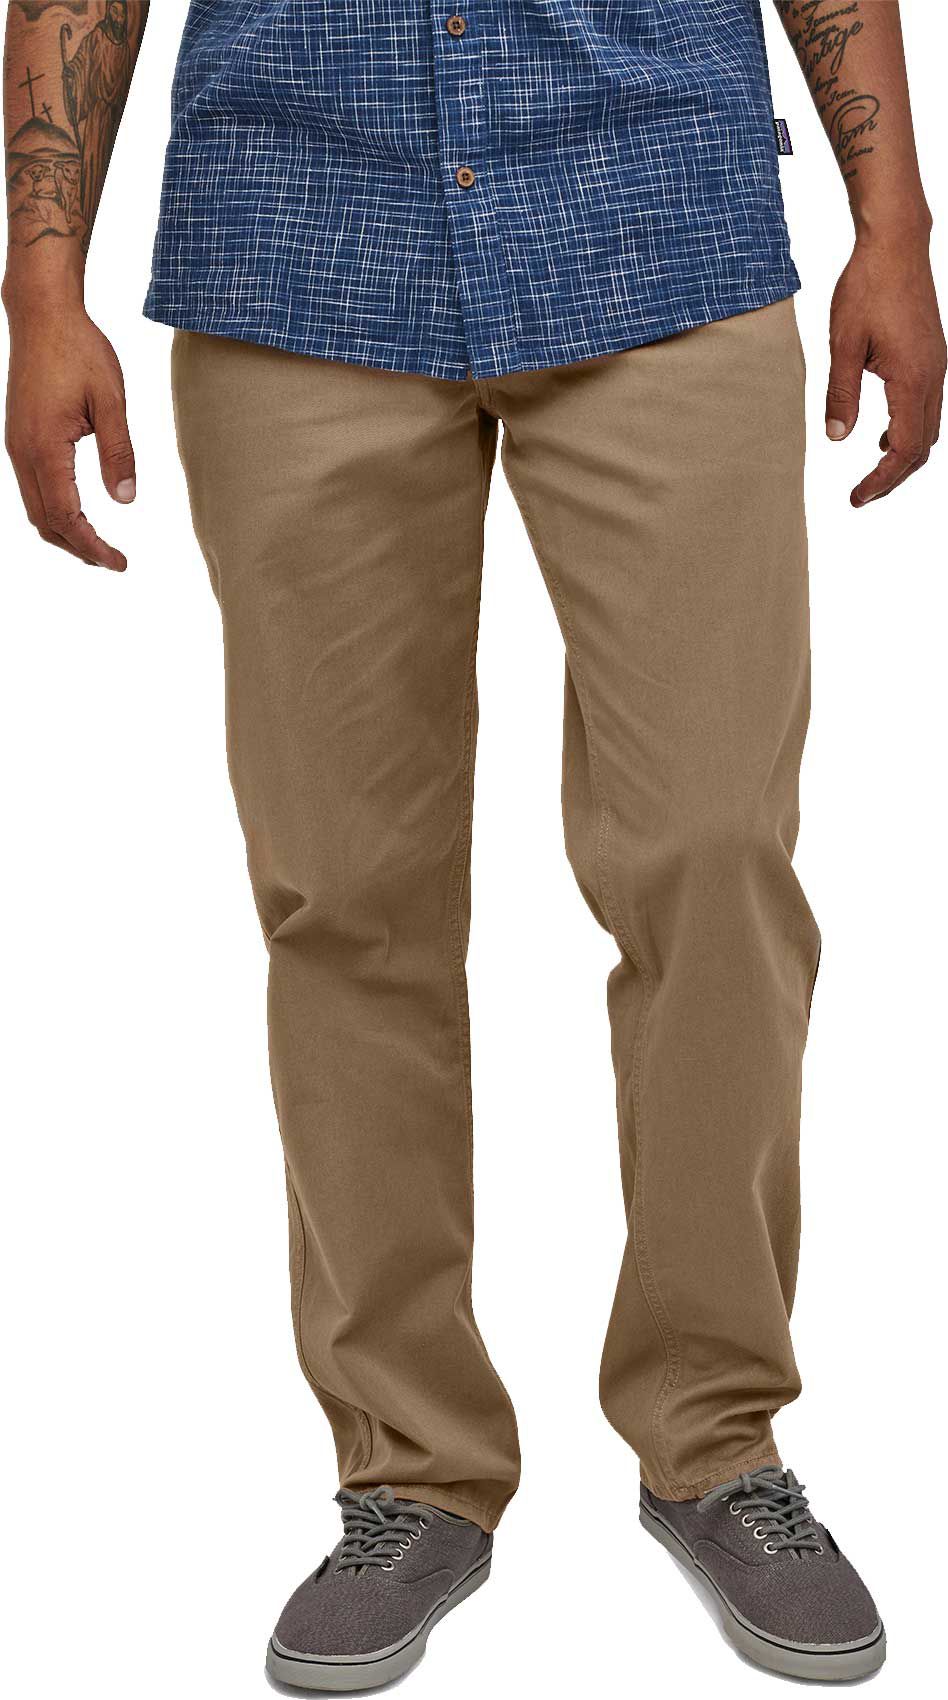 patagonia khaki pants